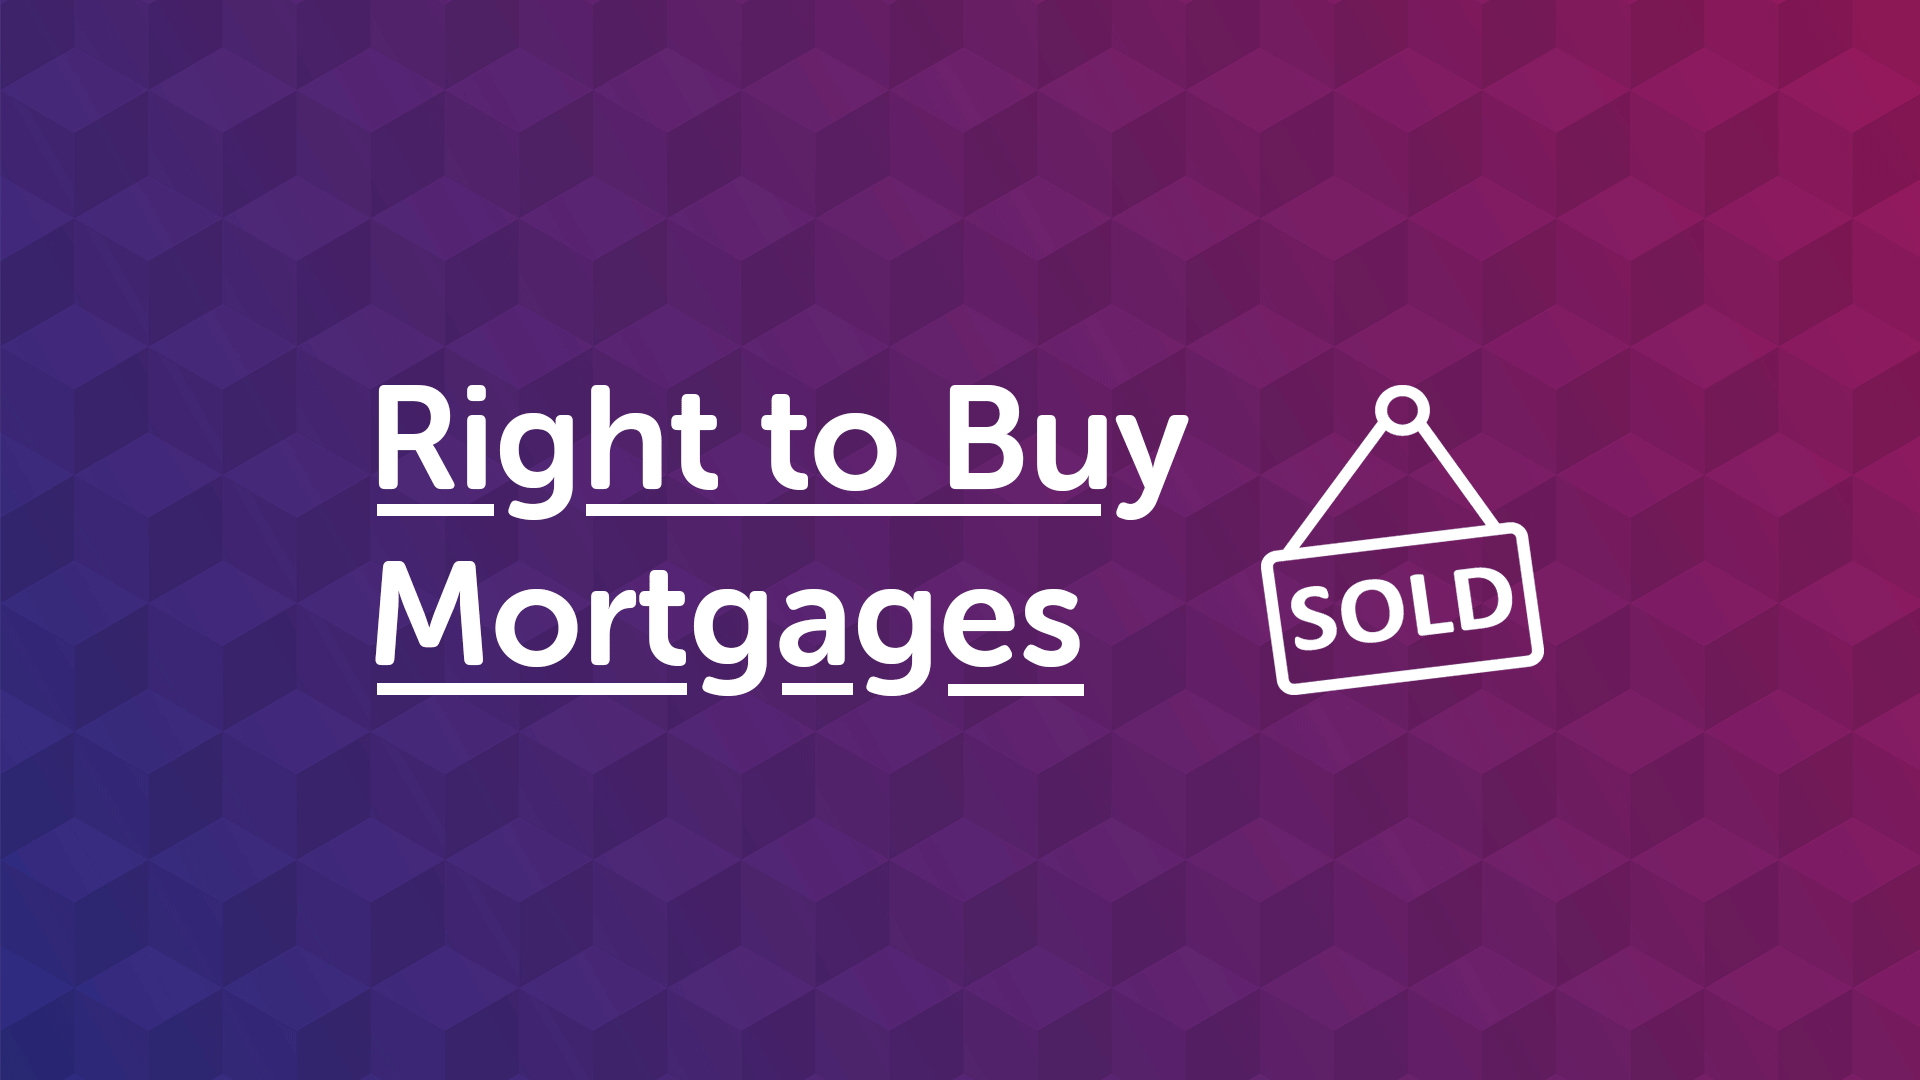 Right To Buy Scheme Mortgage Advice in Harrogate